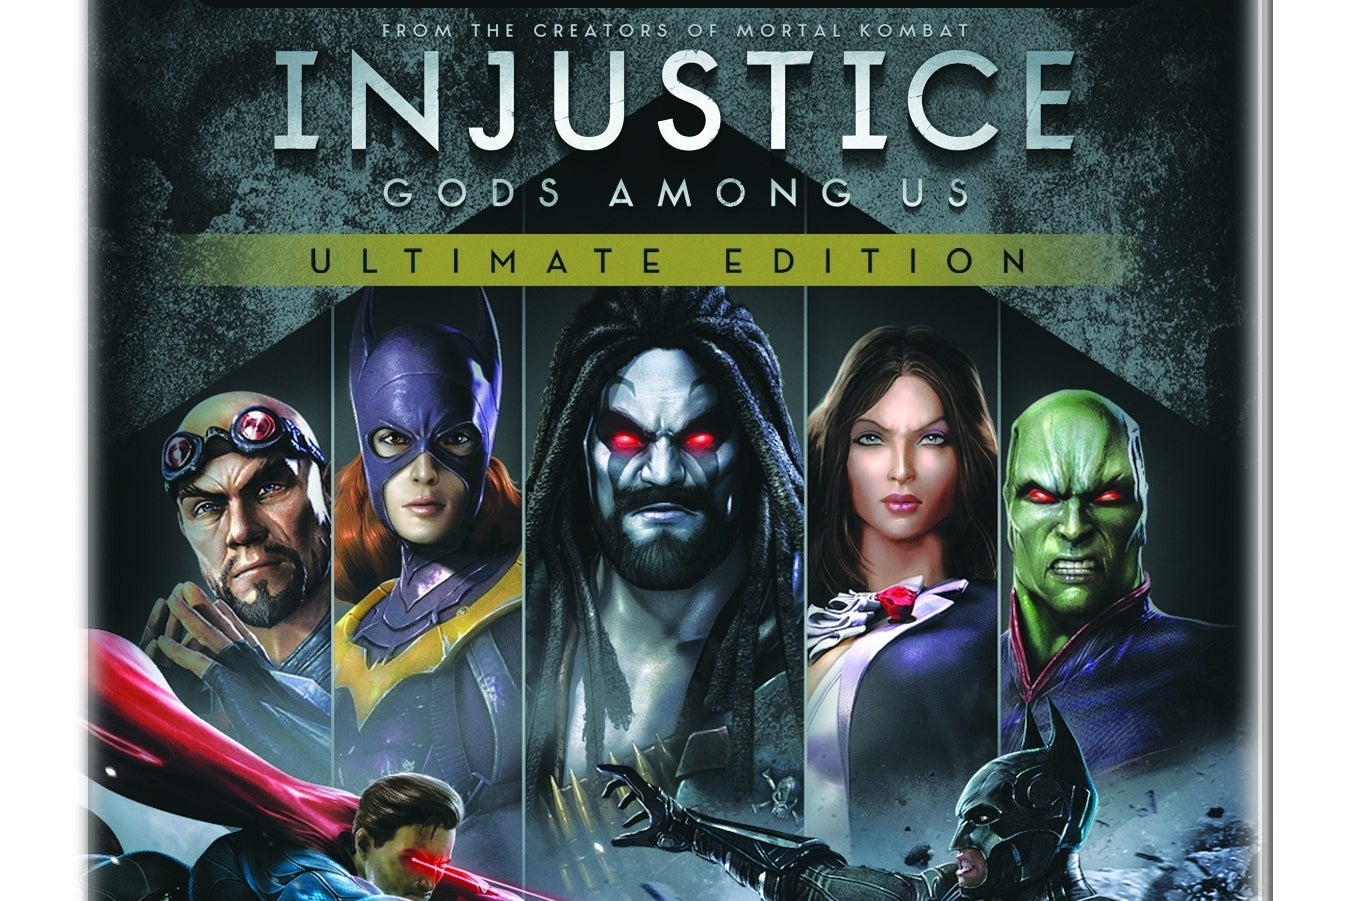 Imagem para Injustice: Gods Among Us confirmado para a PS Vita